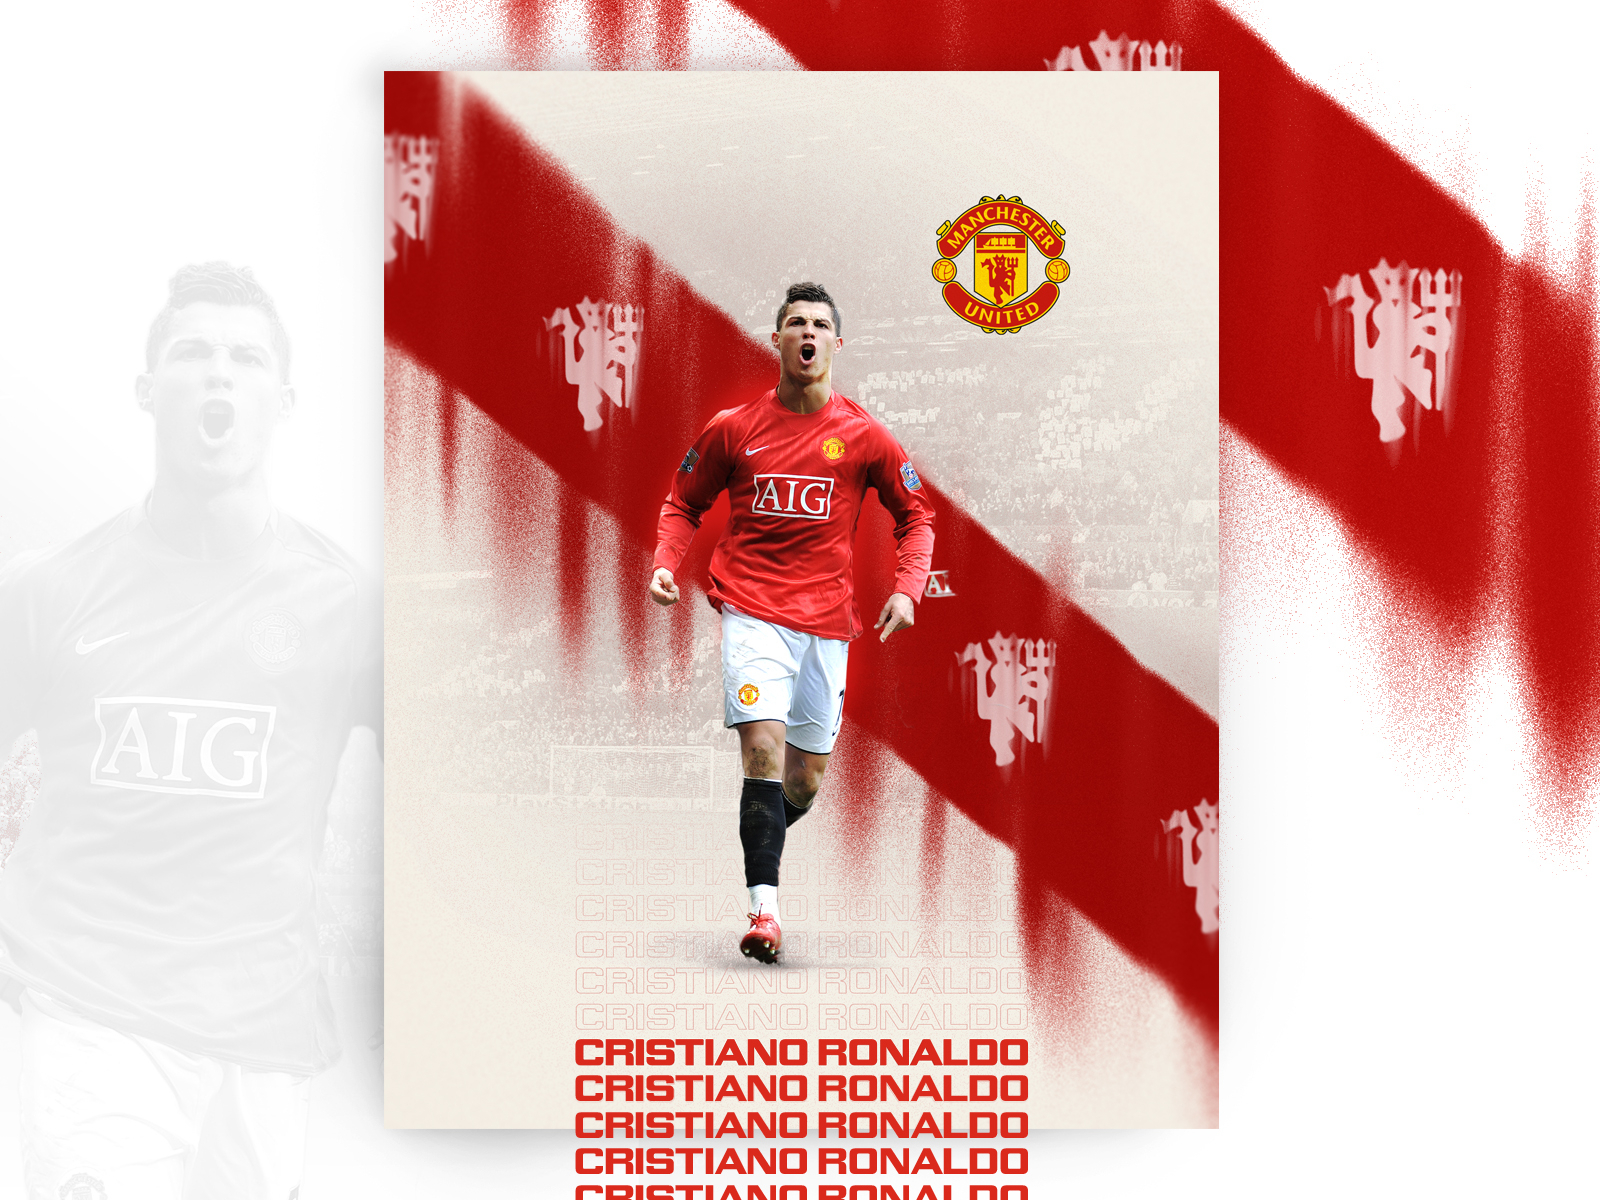 Cristiano Ronaldo Manchester United Poster by Jeppe Lambæk on Dribbble